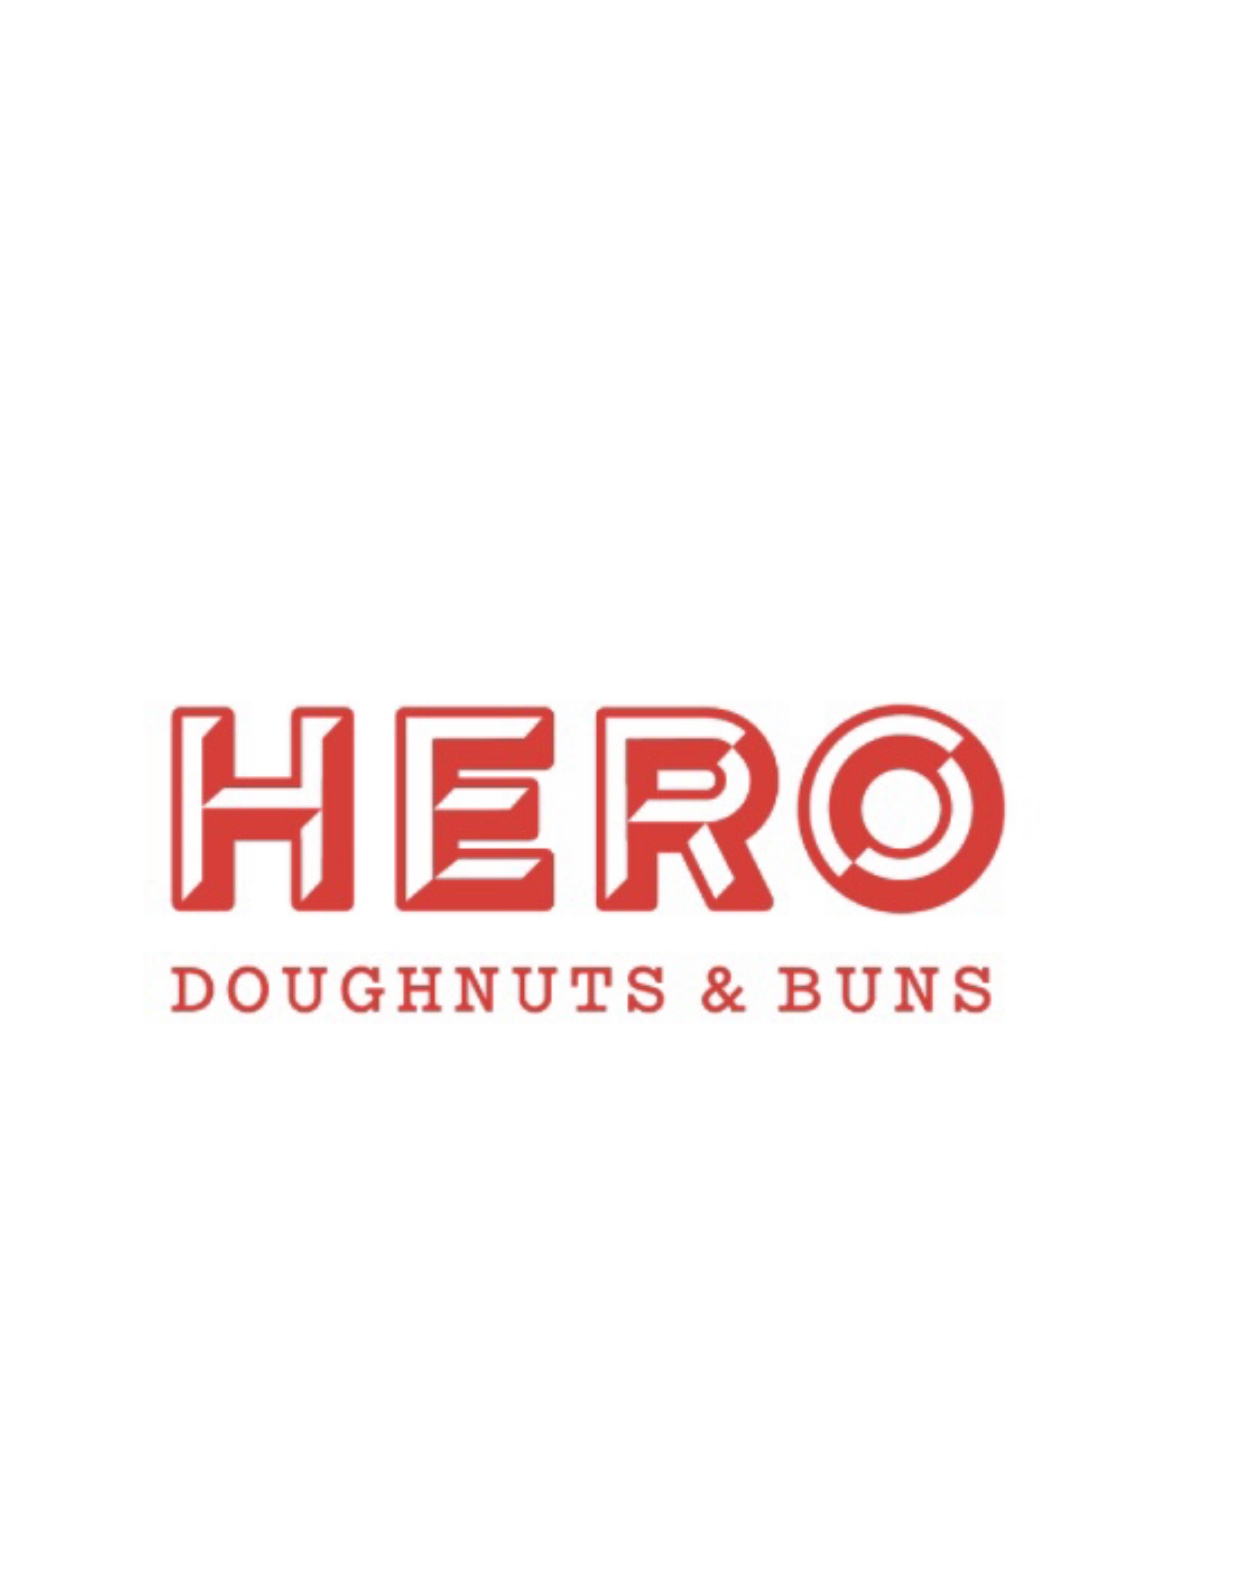 HERO Doughnuts